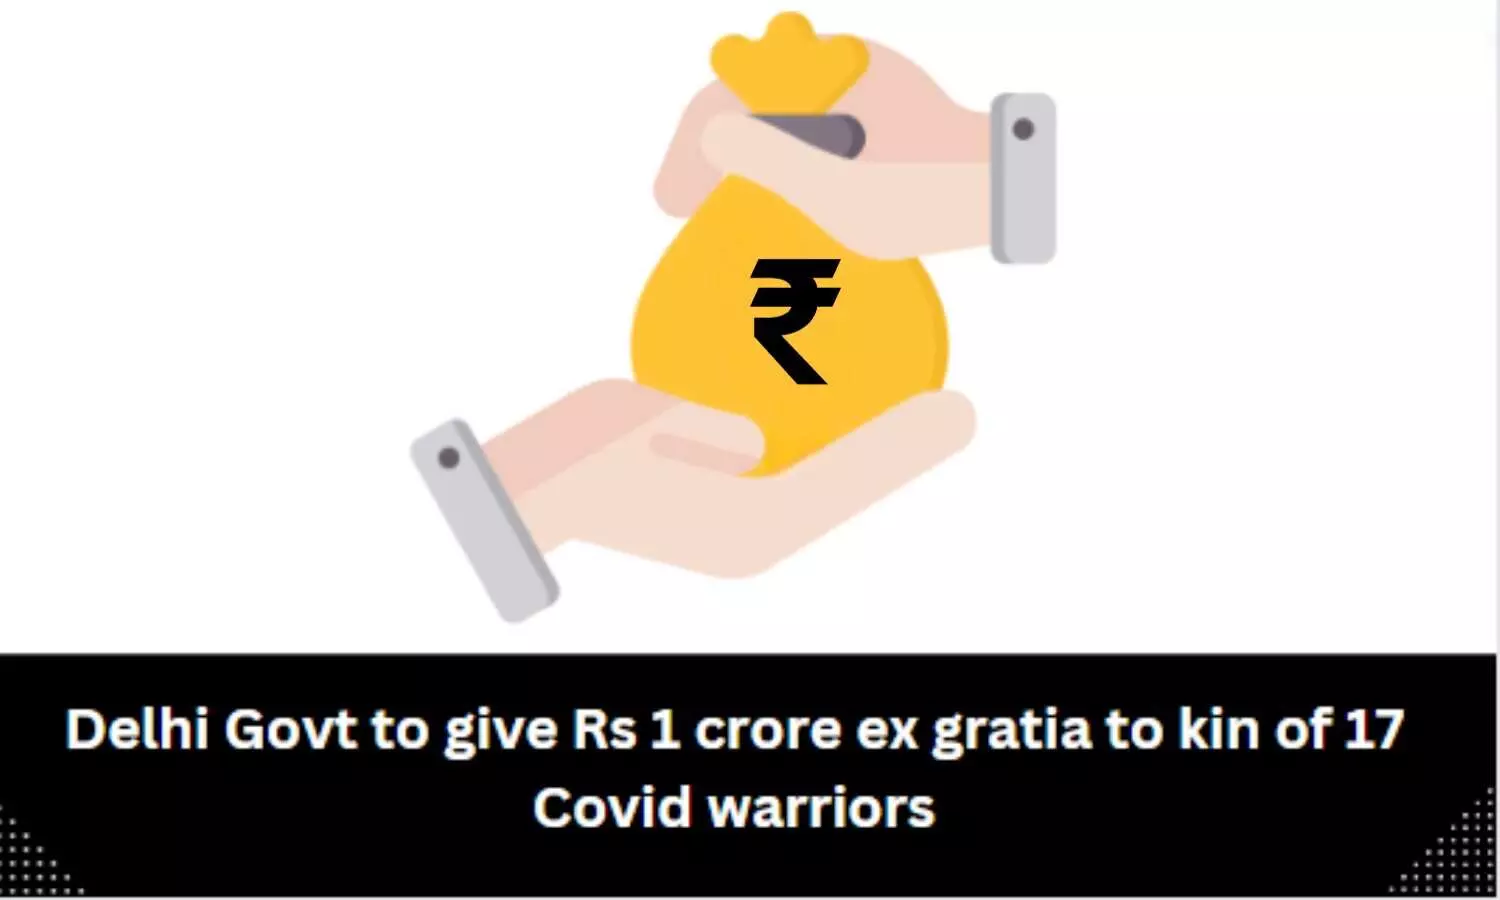 Delhi Govt to give Rs 1 crore ex gratia to kin of 17 Covid warriors